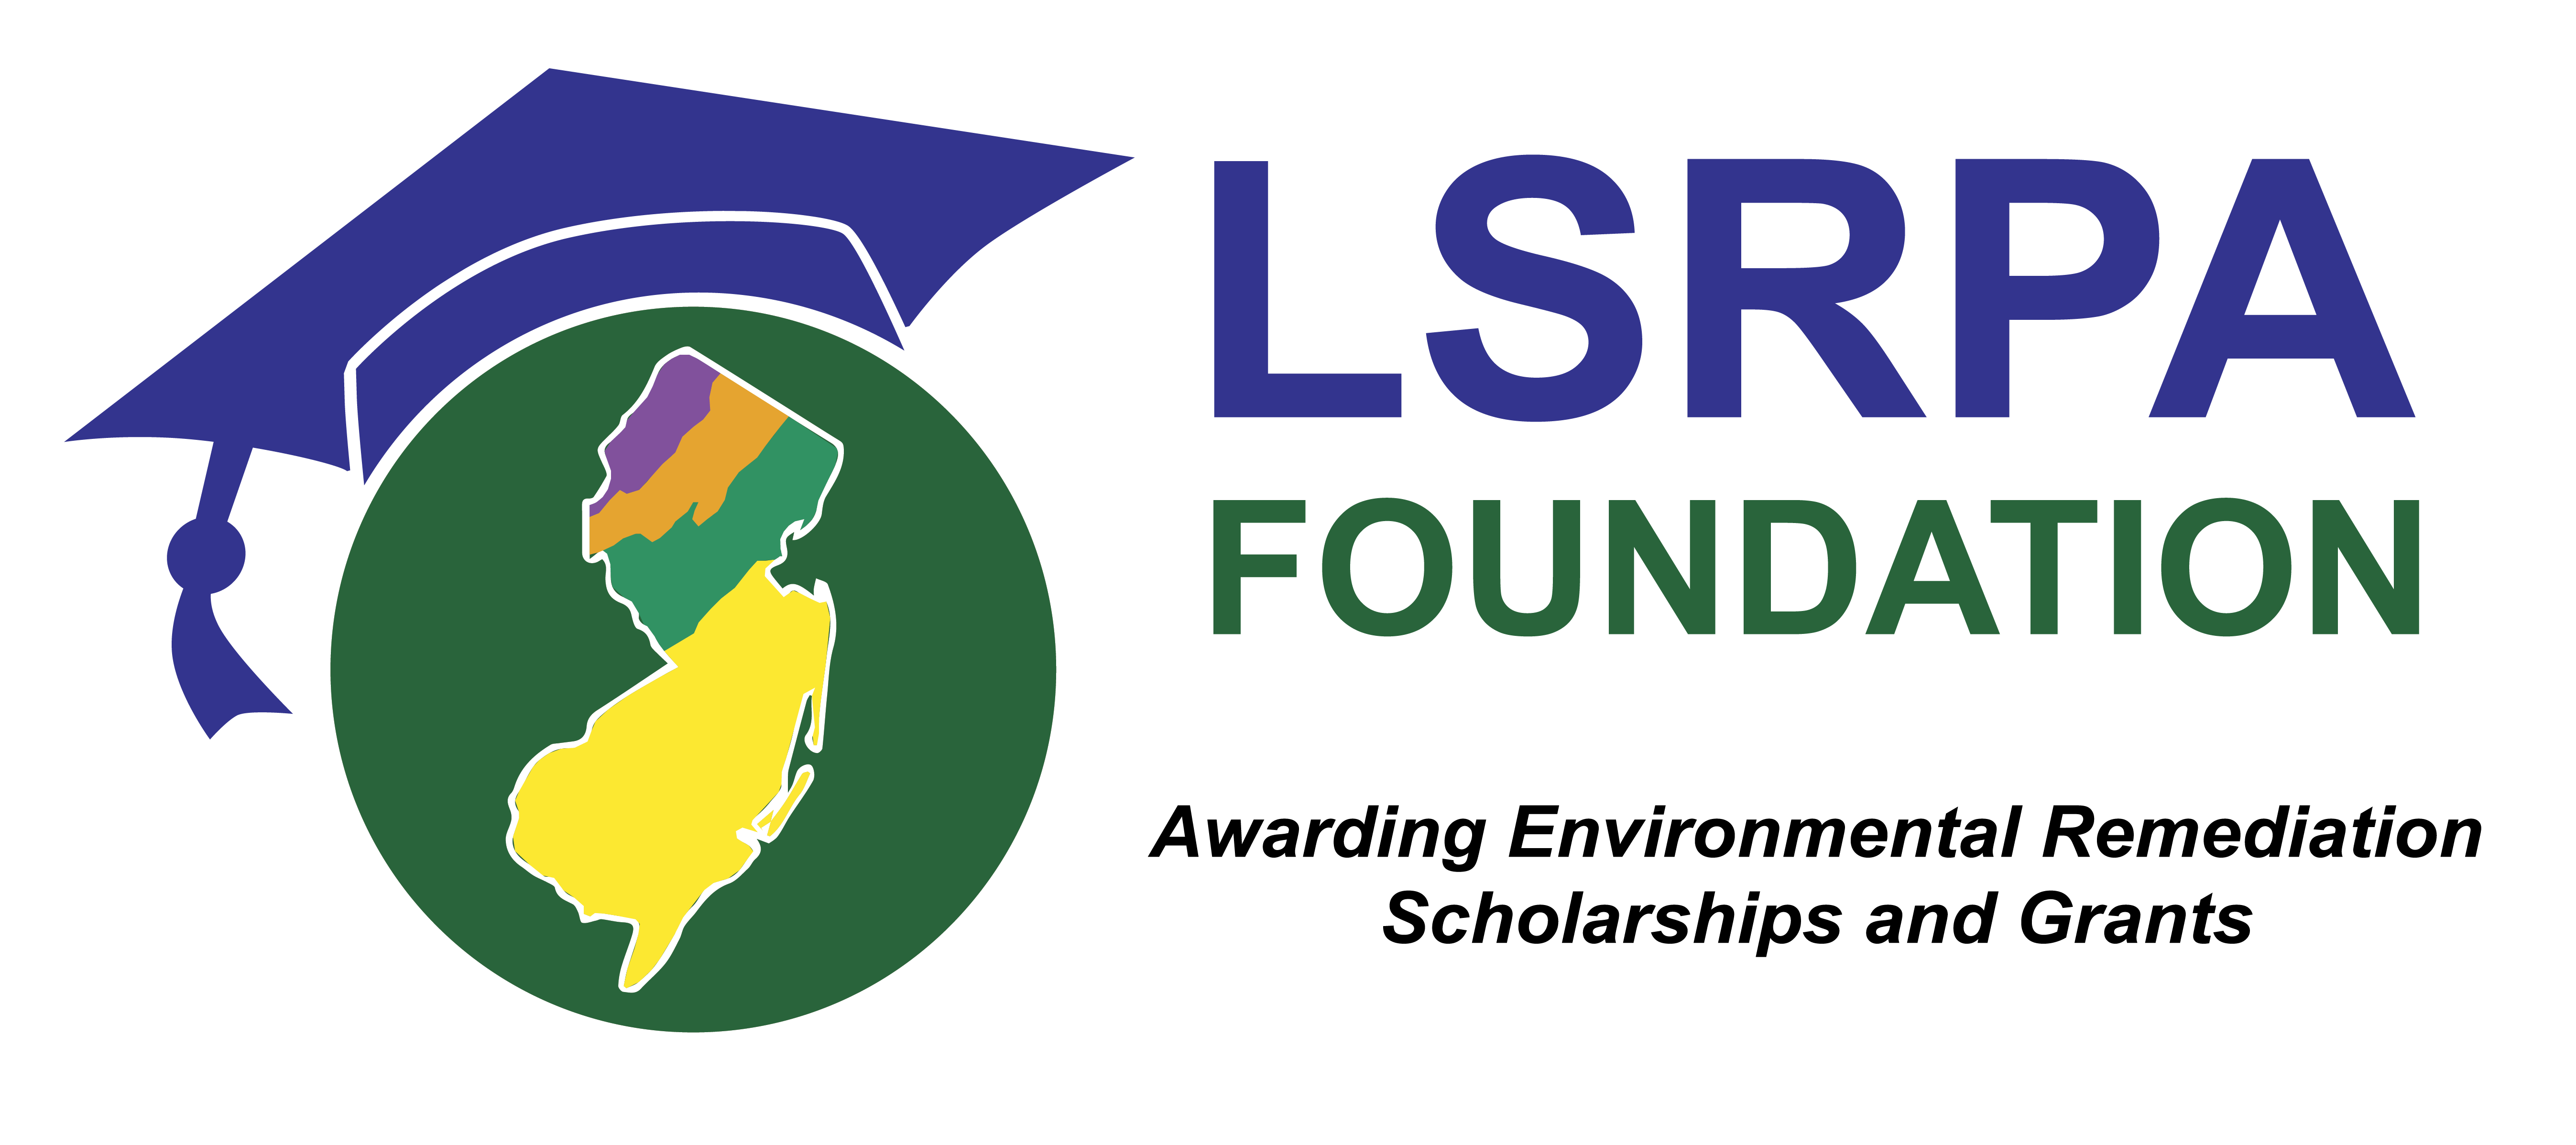 LSRPA Foundation logo